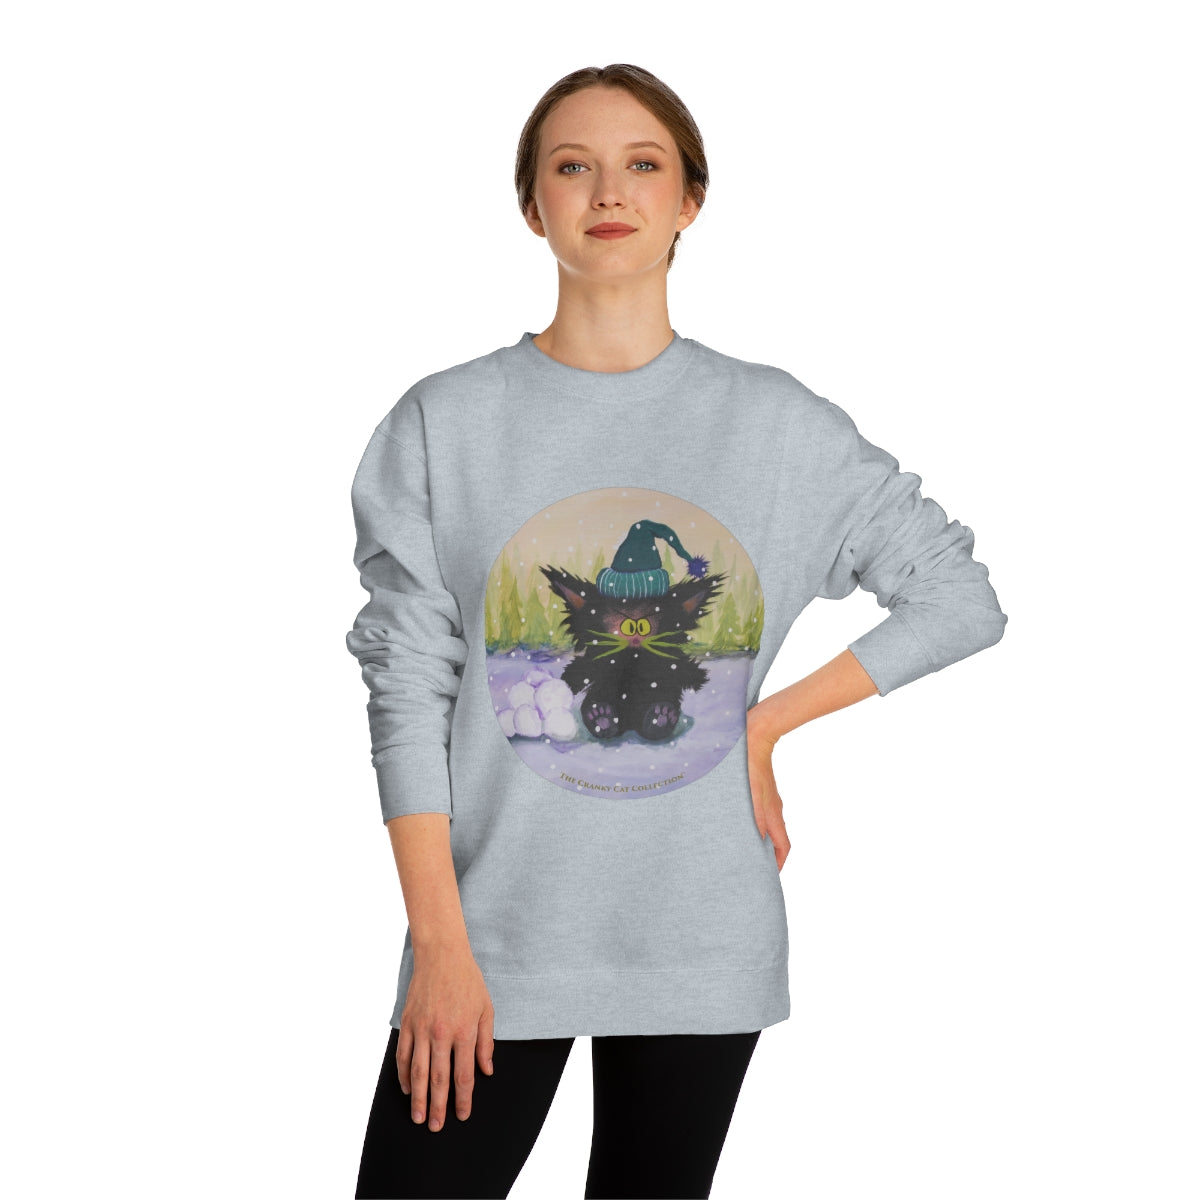 Cranky Cat Winter-Themed Sweatshirt - Free Shipping!